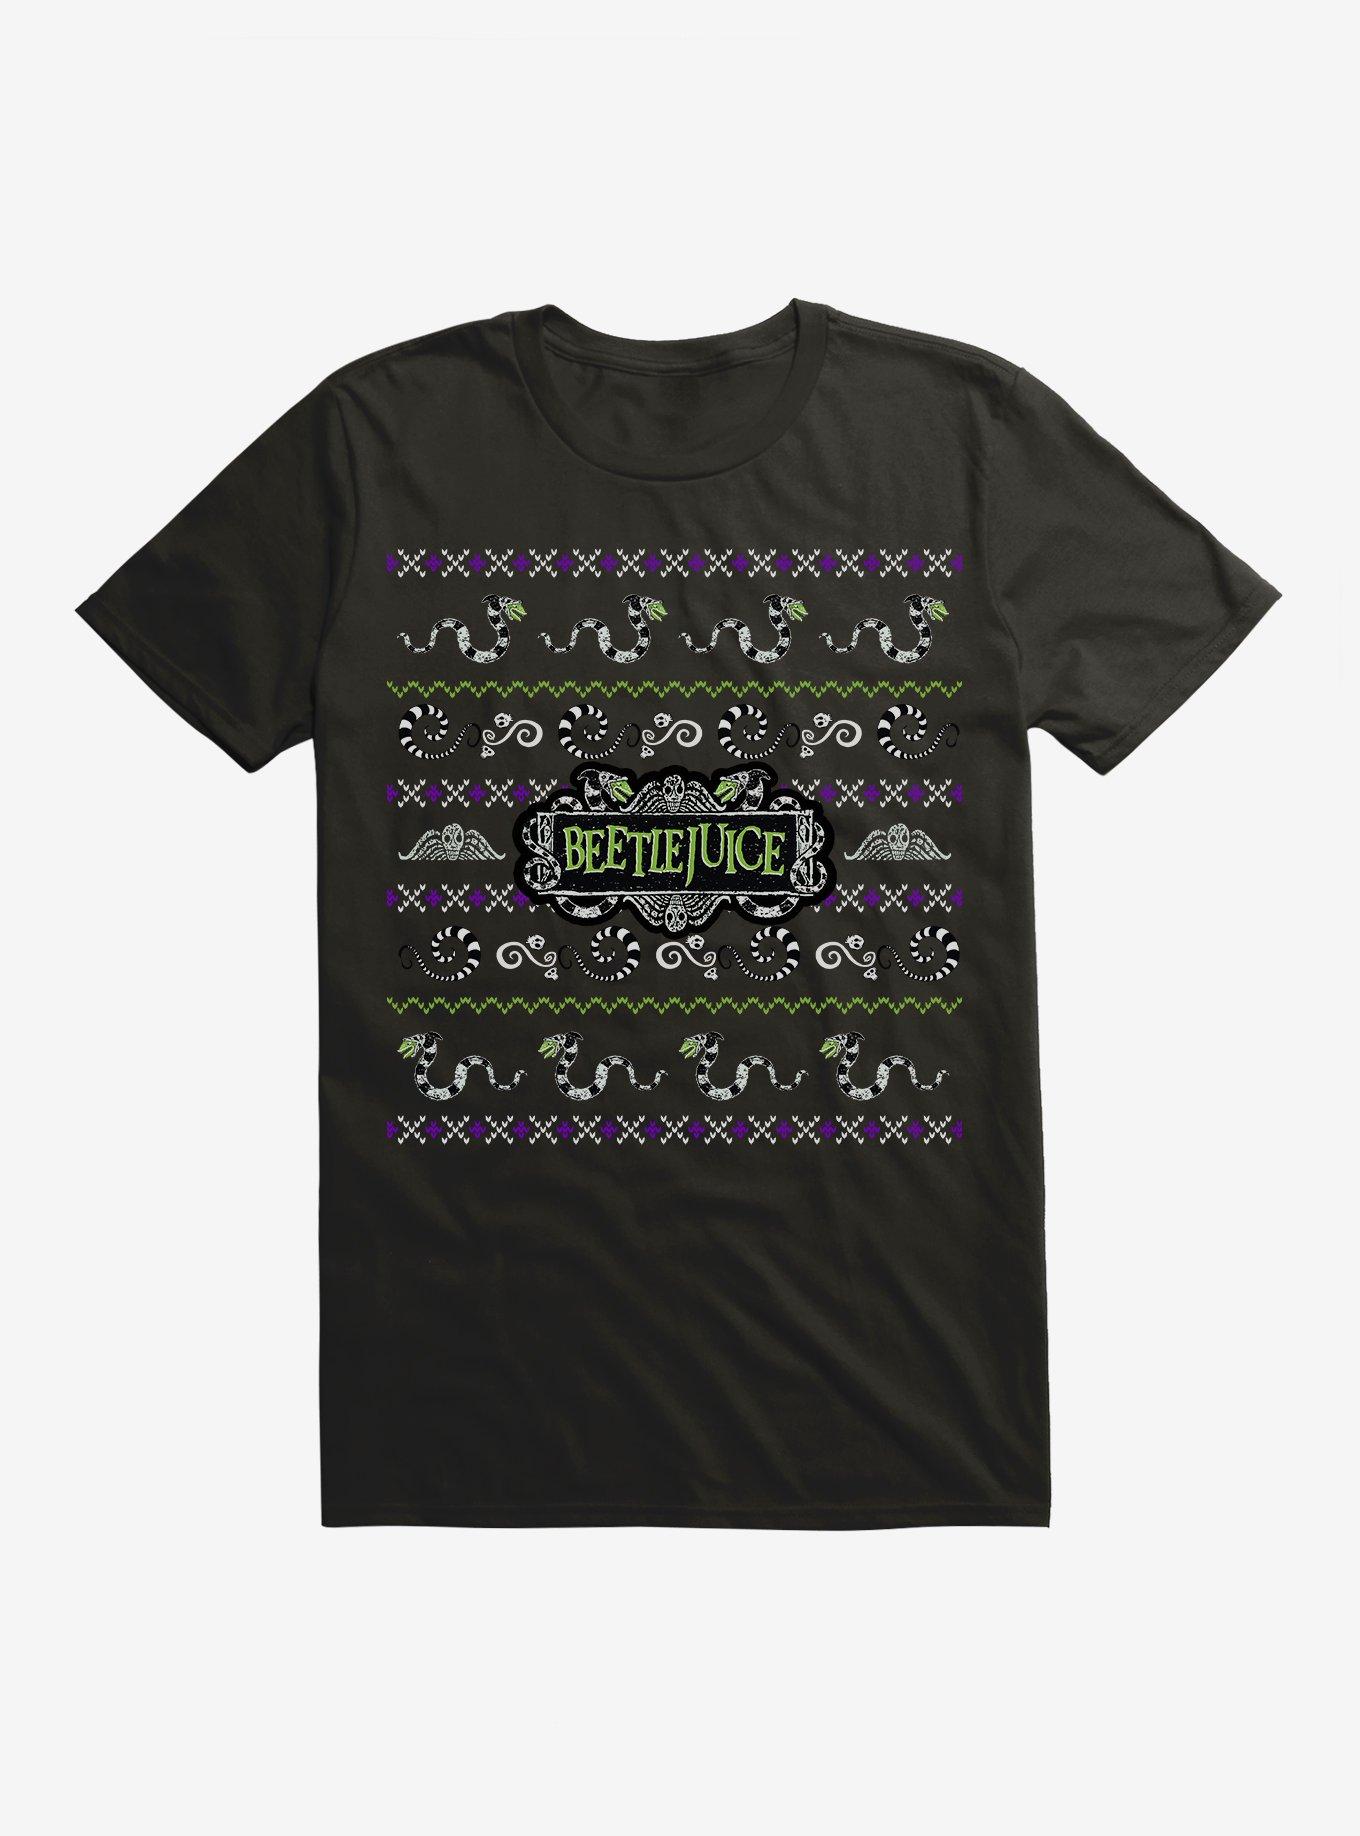 Beetlejuice Ugly Christmas Sweater Pattern T-Shirt